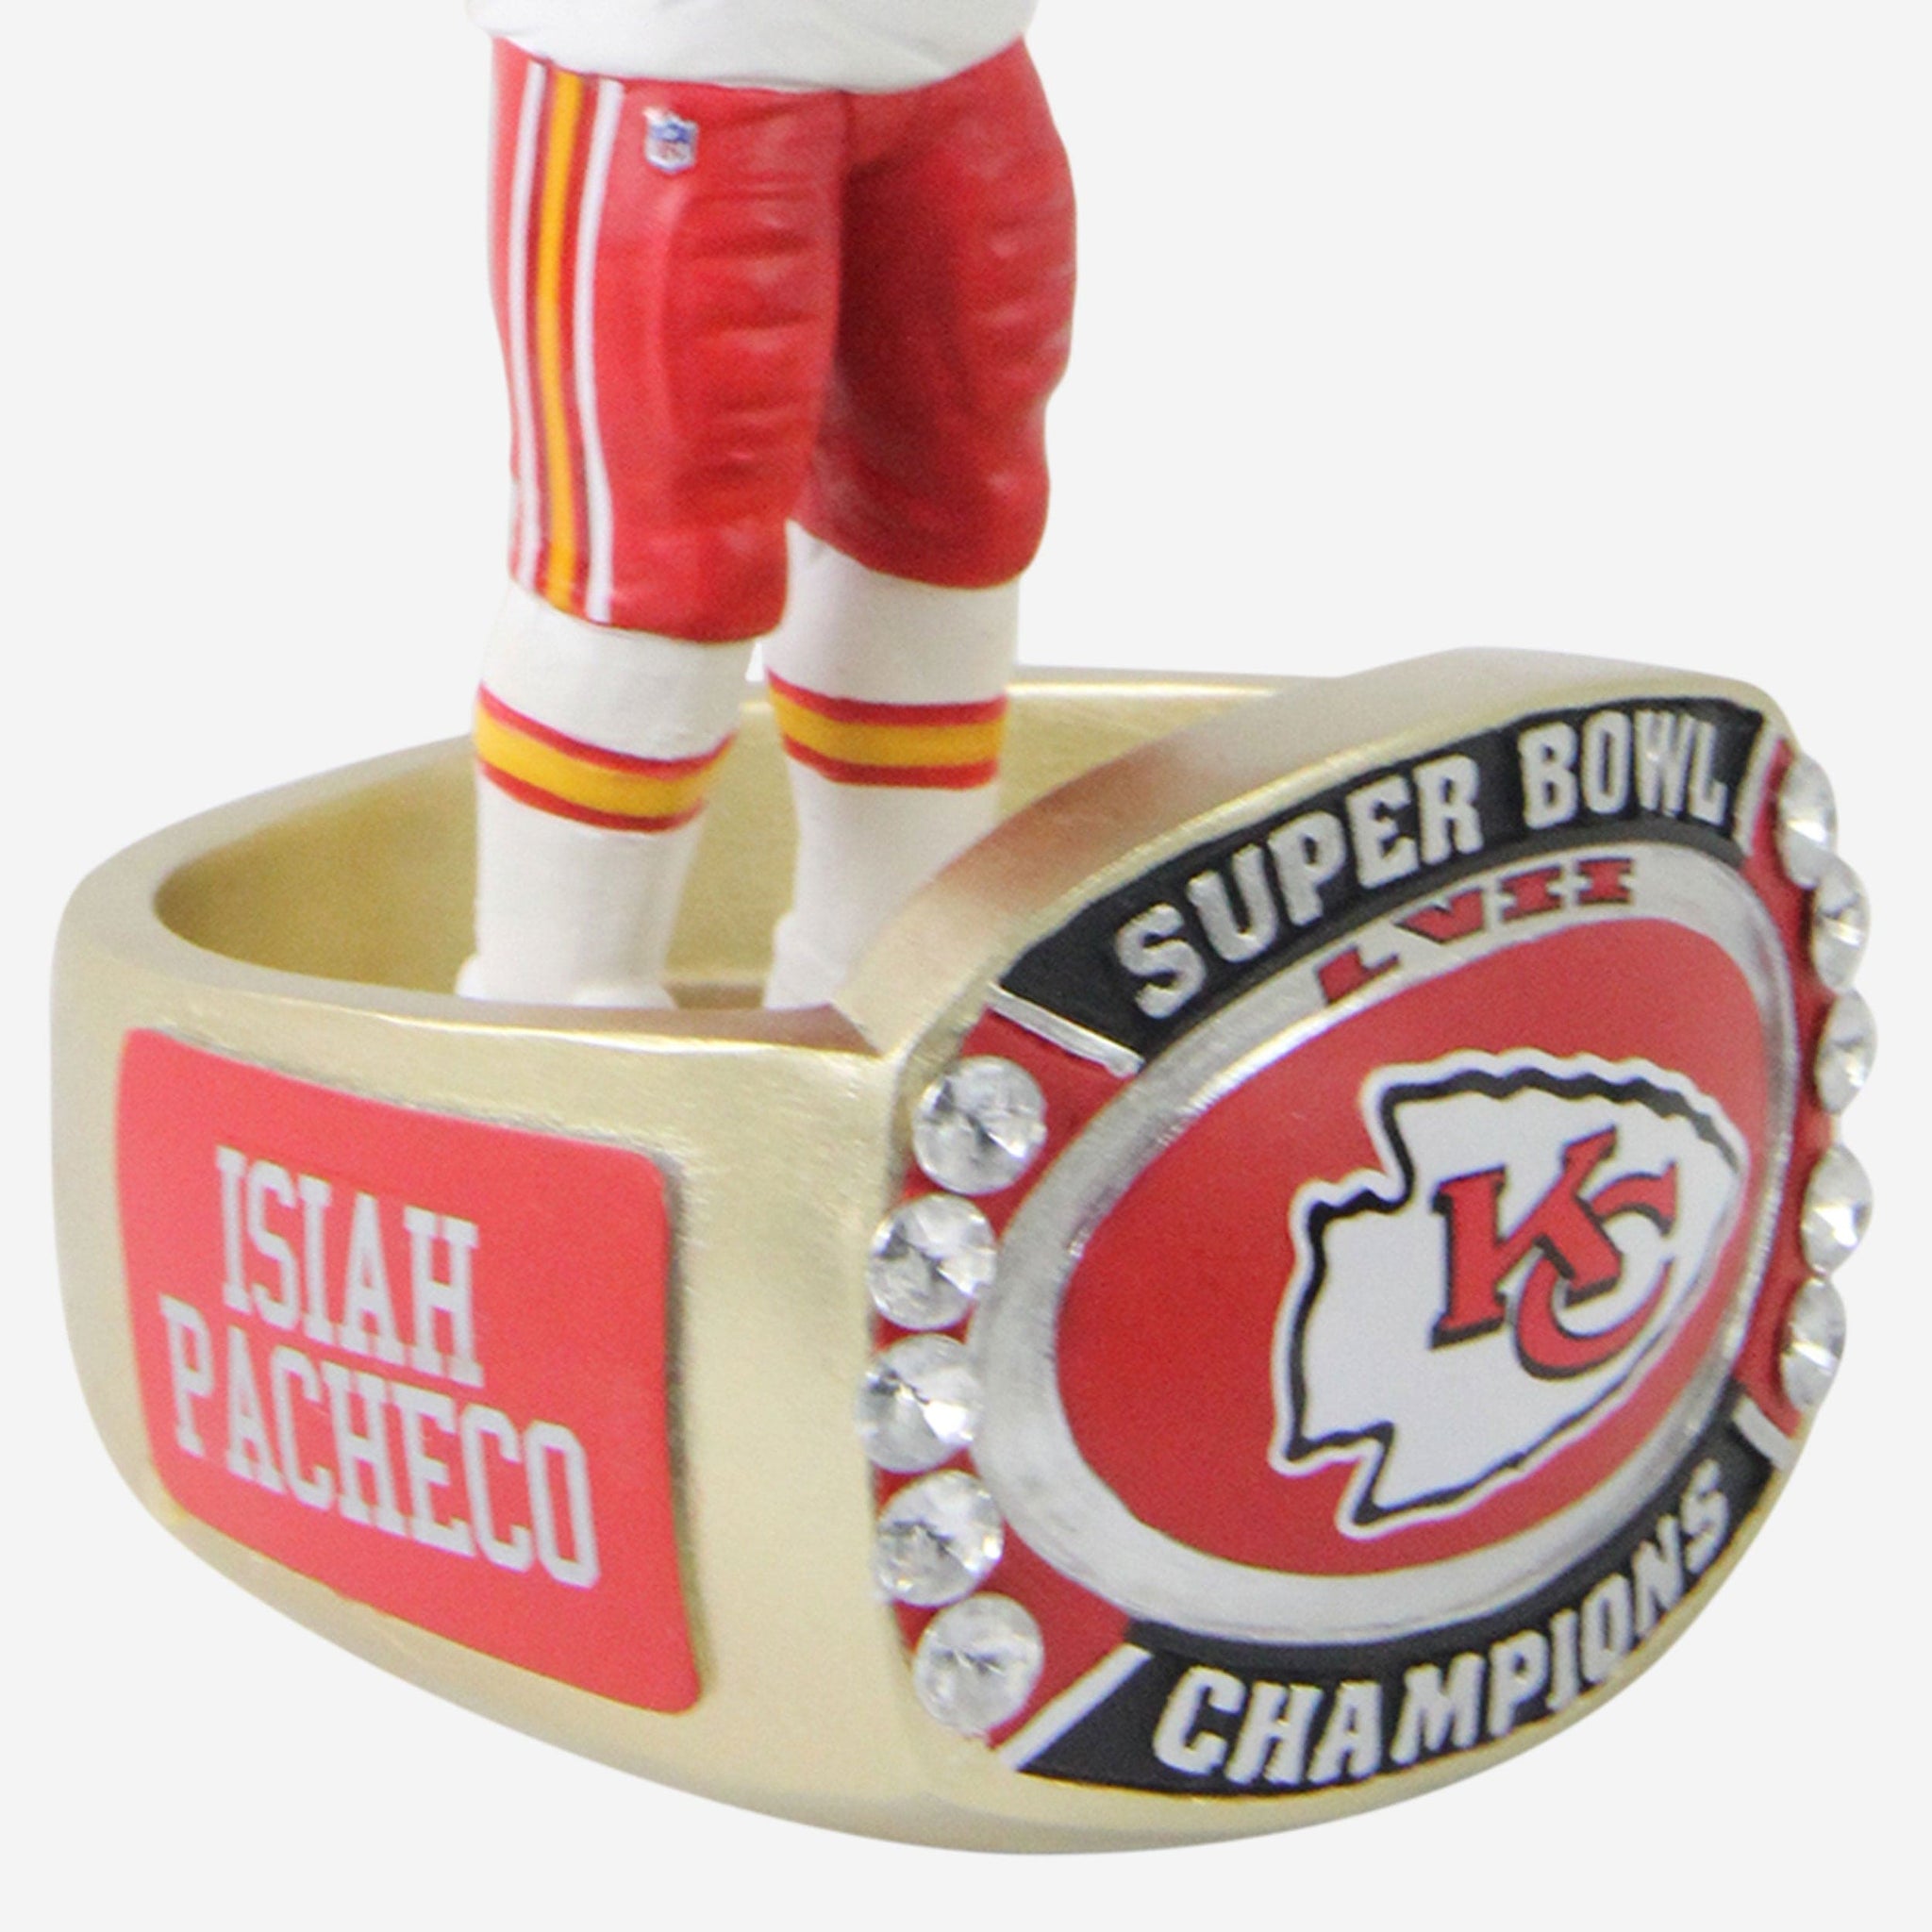 Kansas City Chiefs receive Super Bowl LVII rings - KAKE